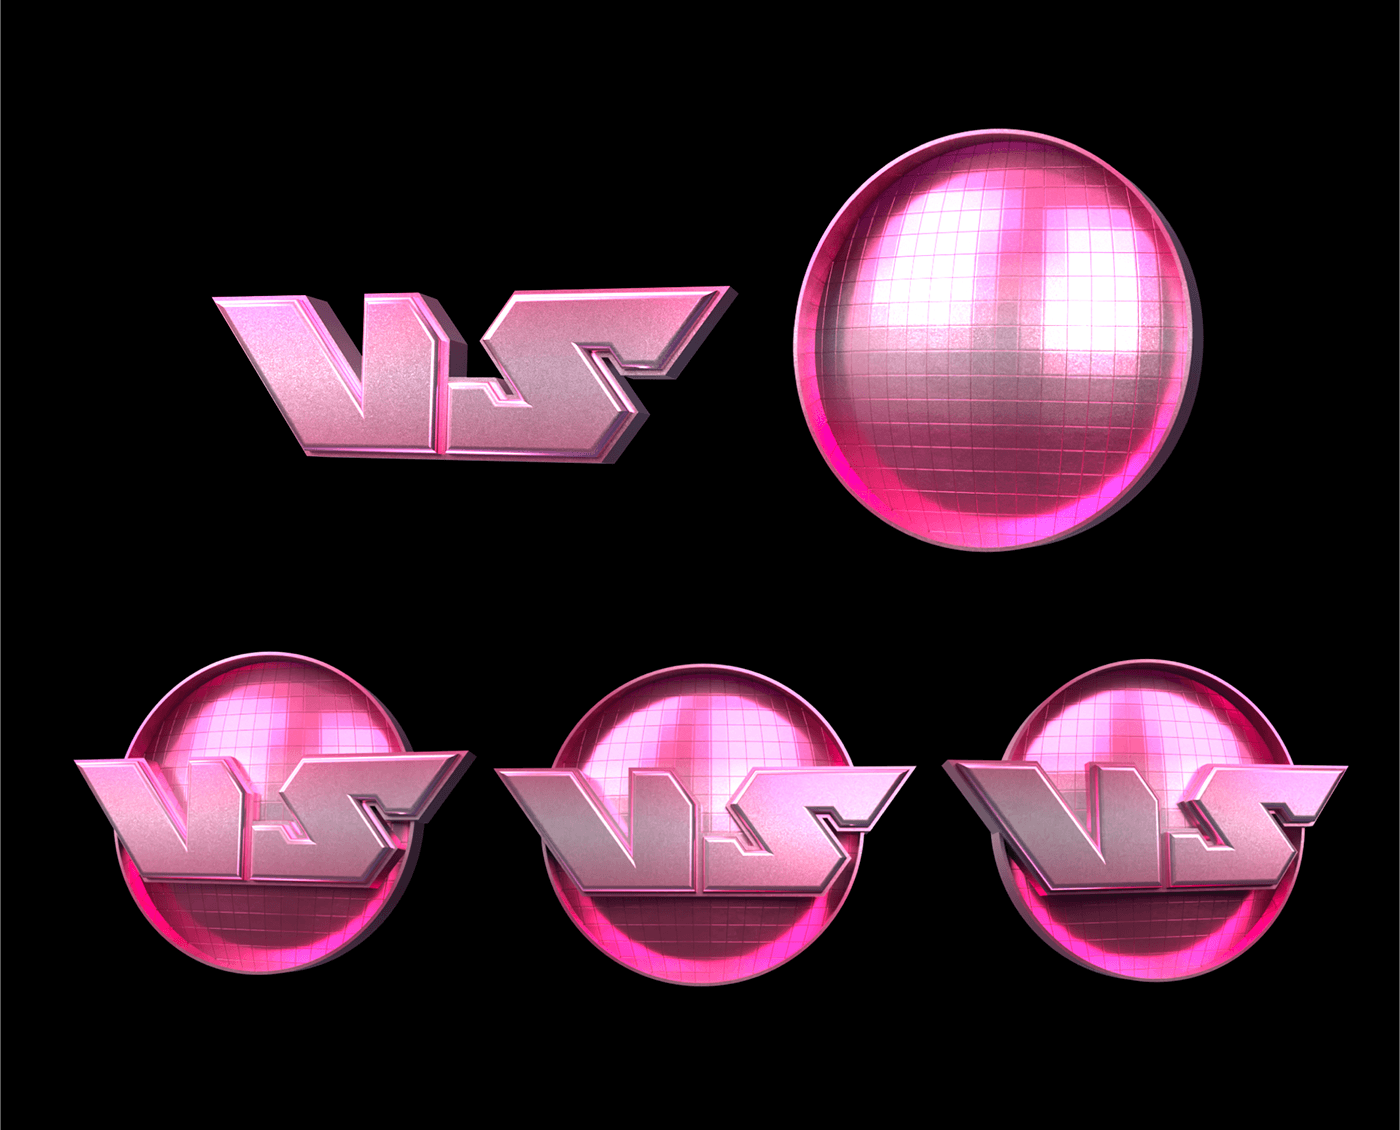 mnet karaoke mirrorball disco music survival brand identity Logo Design 노래방 노래방VS